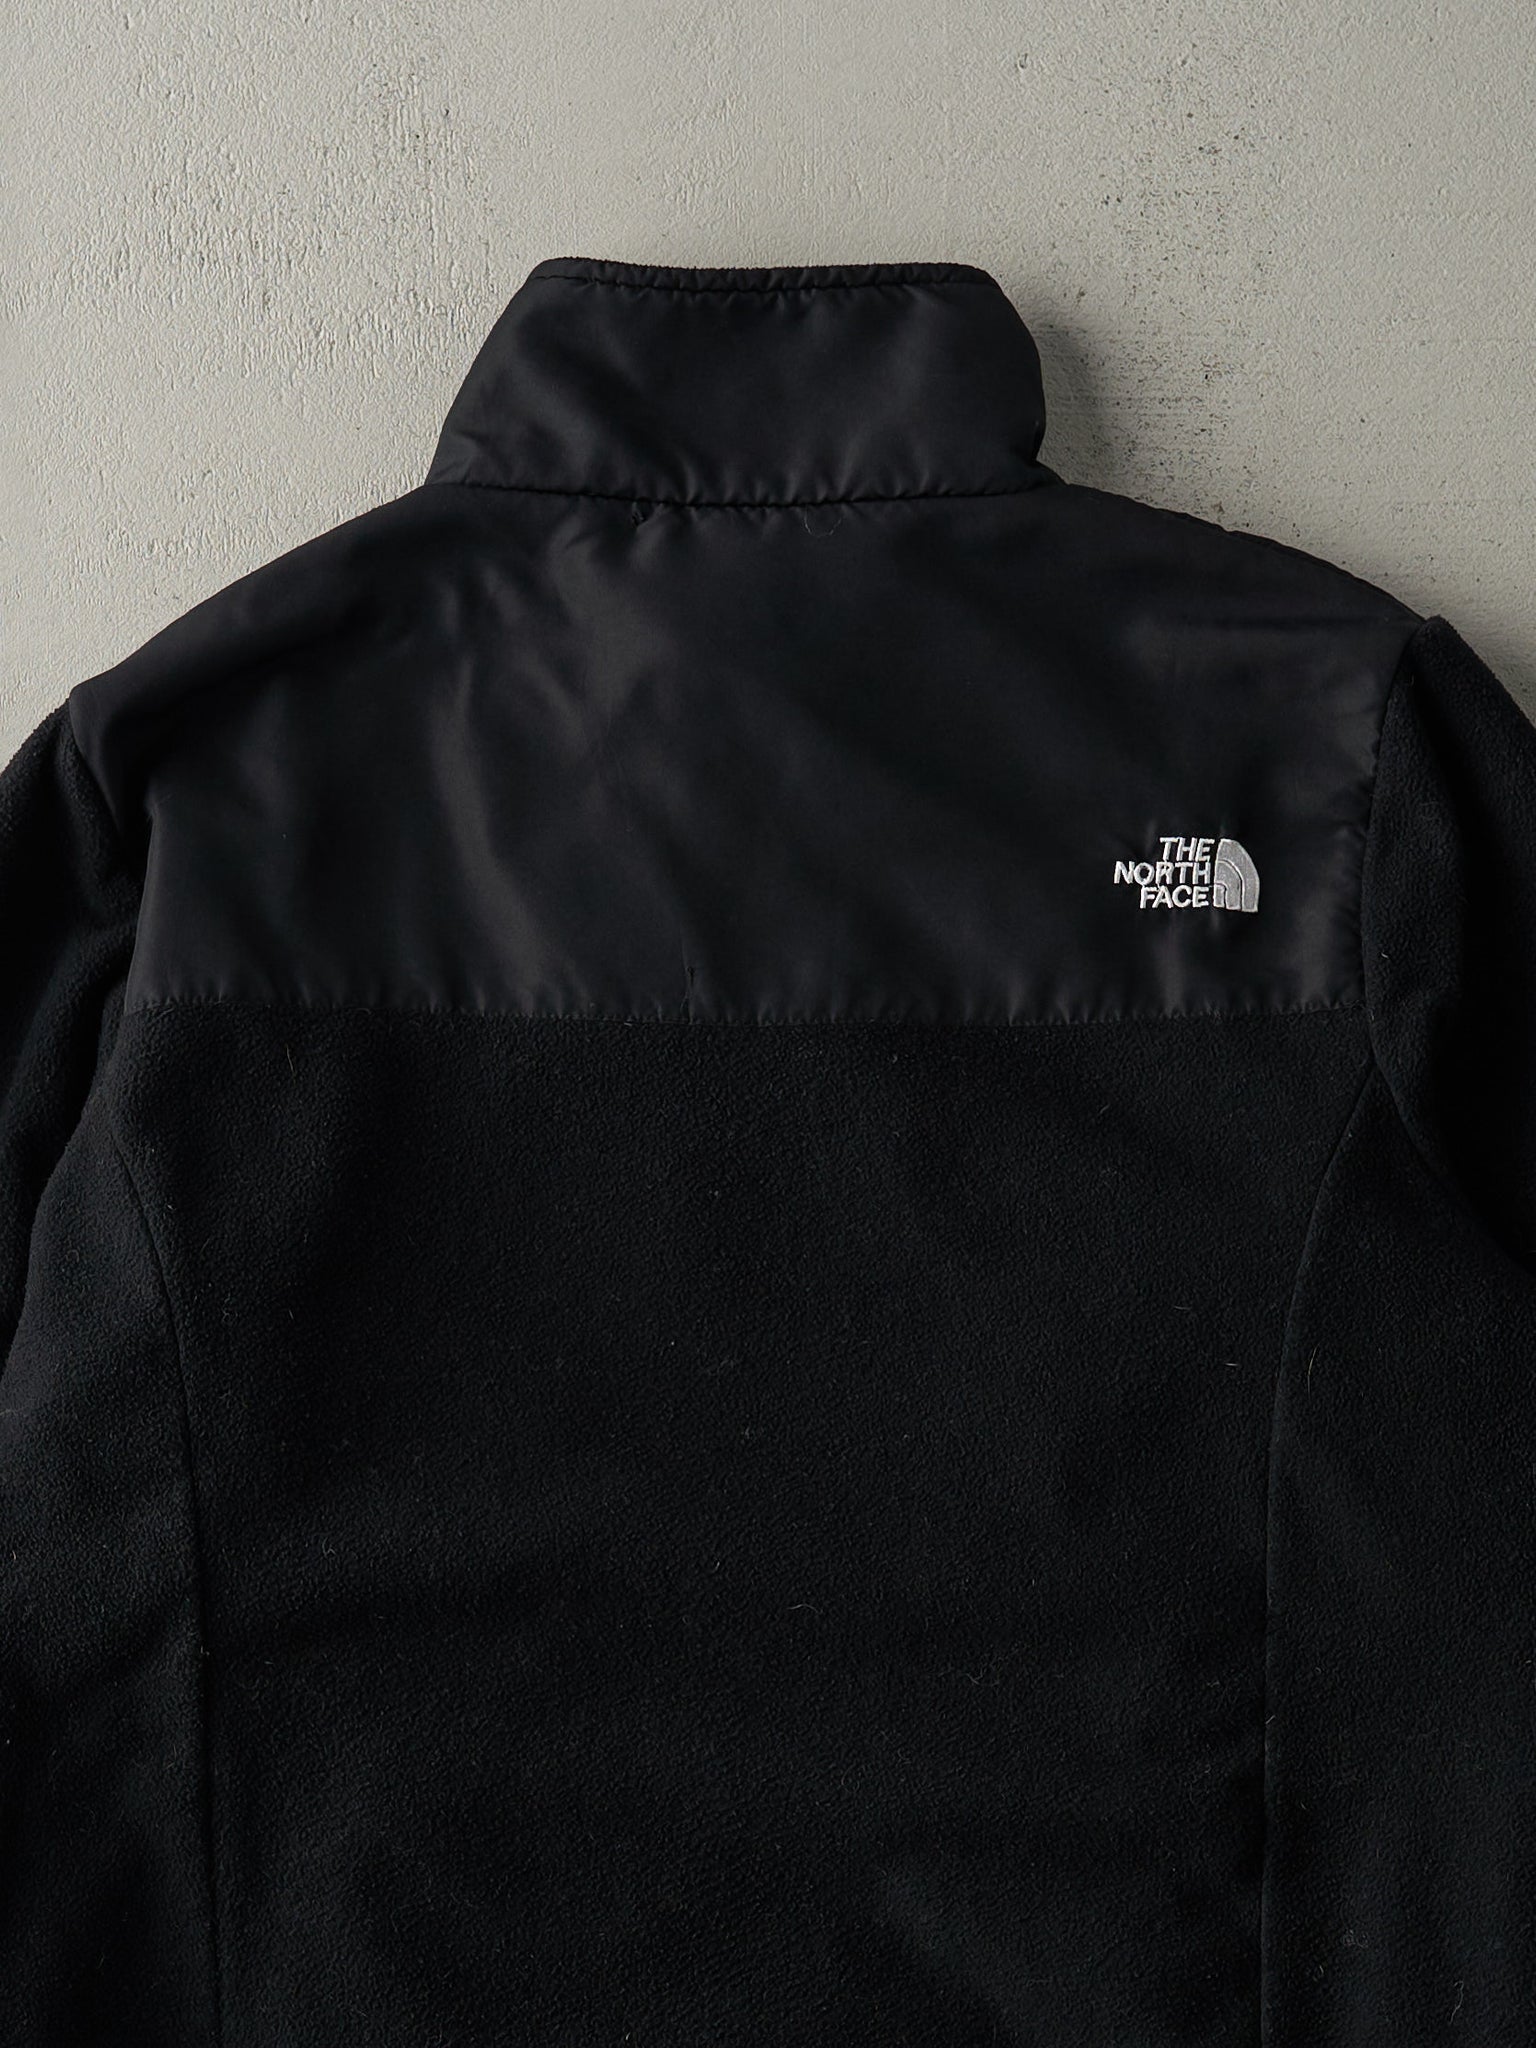 Vintage 90s Black The North Face Zip Up Fleece Jacket (S/M)